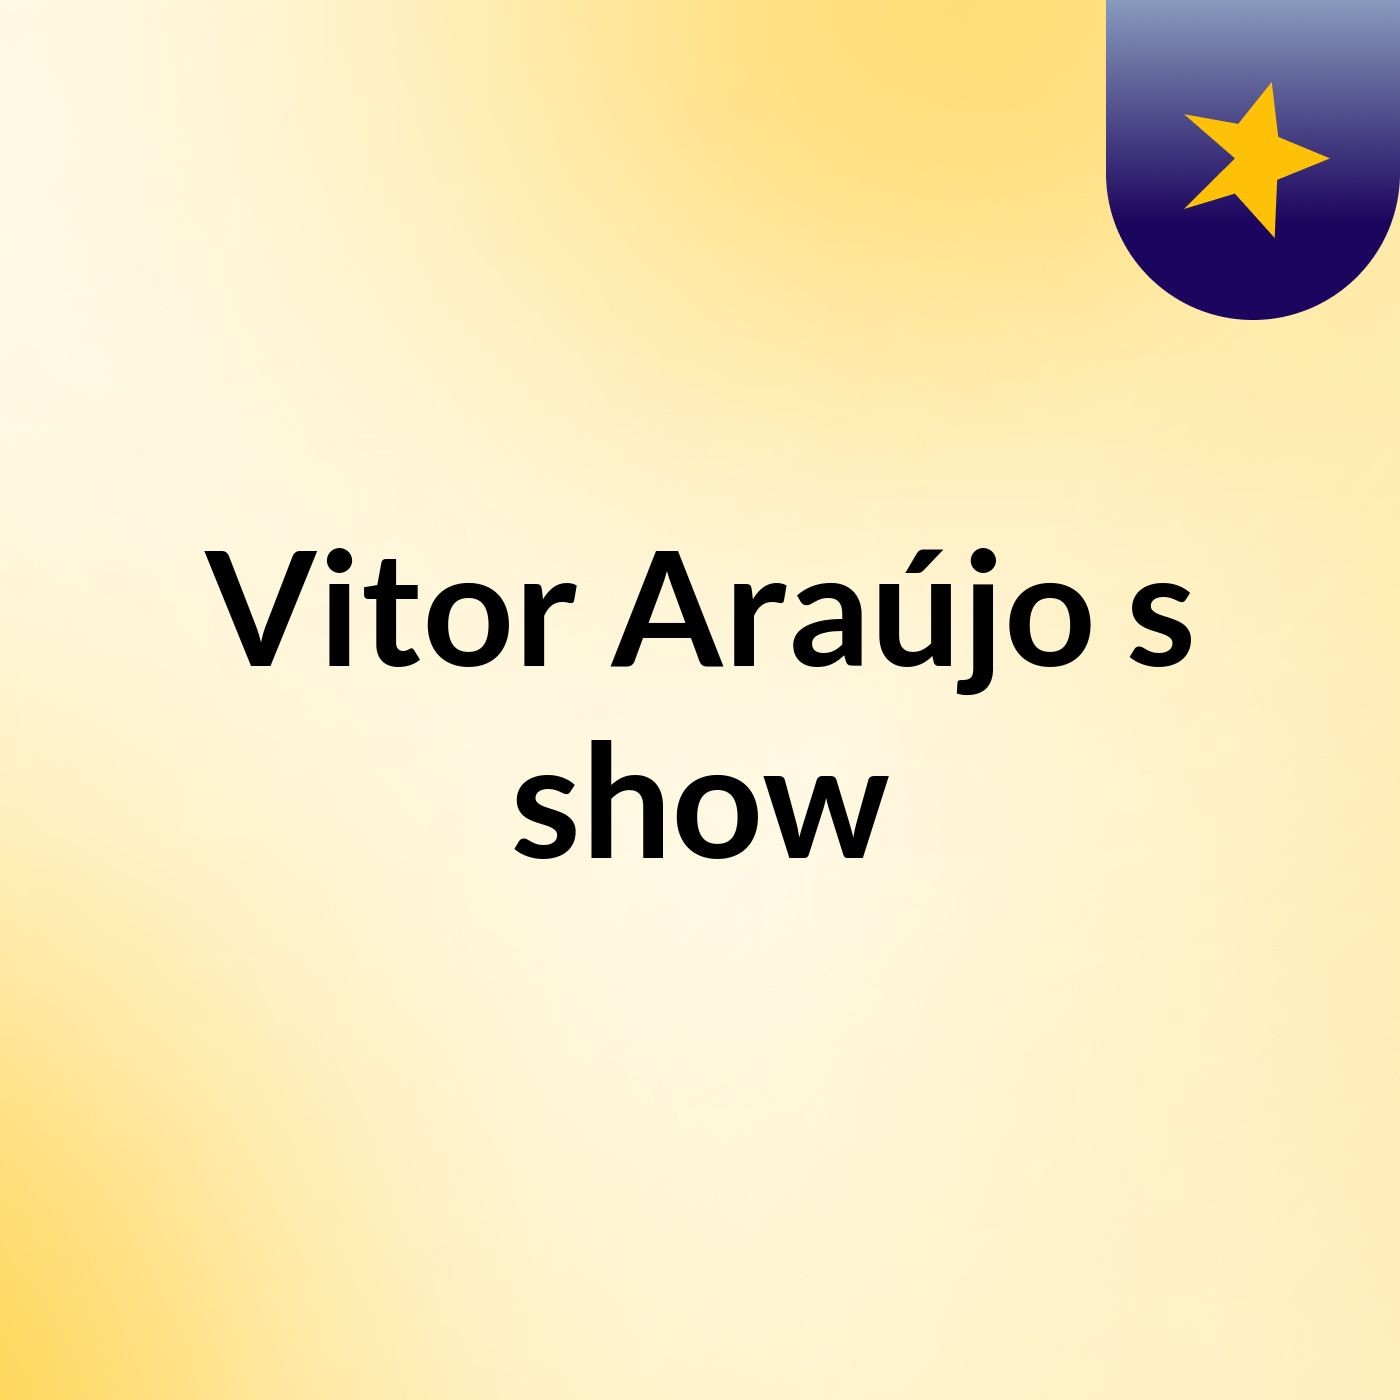 Vitor Araújo's show